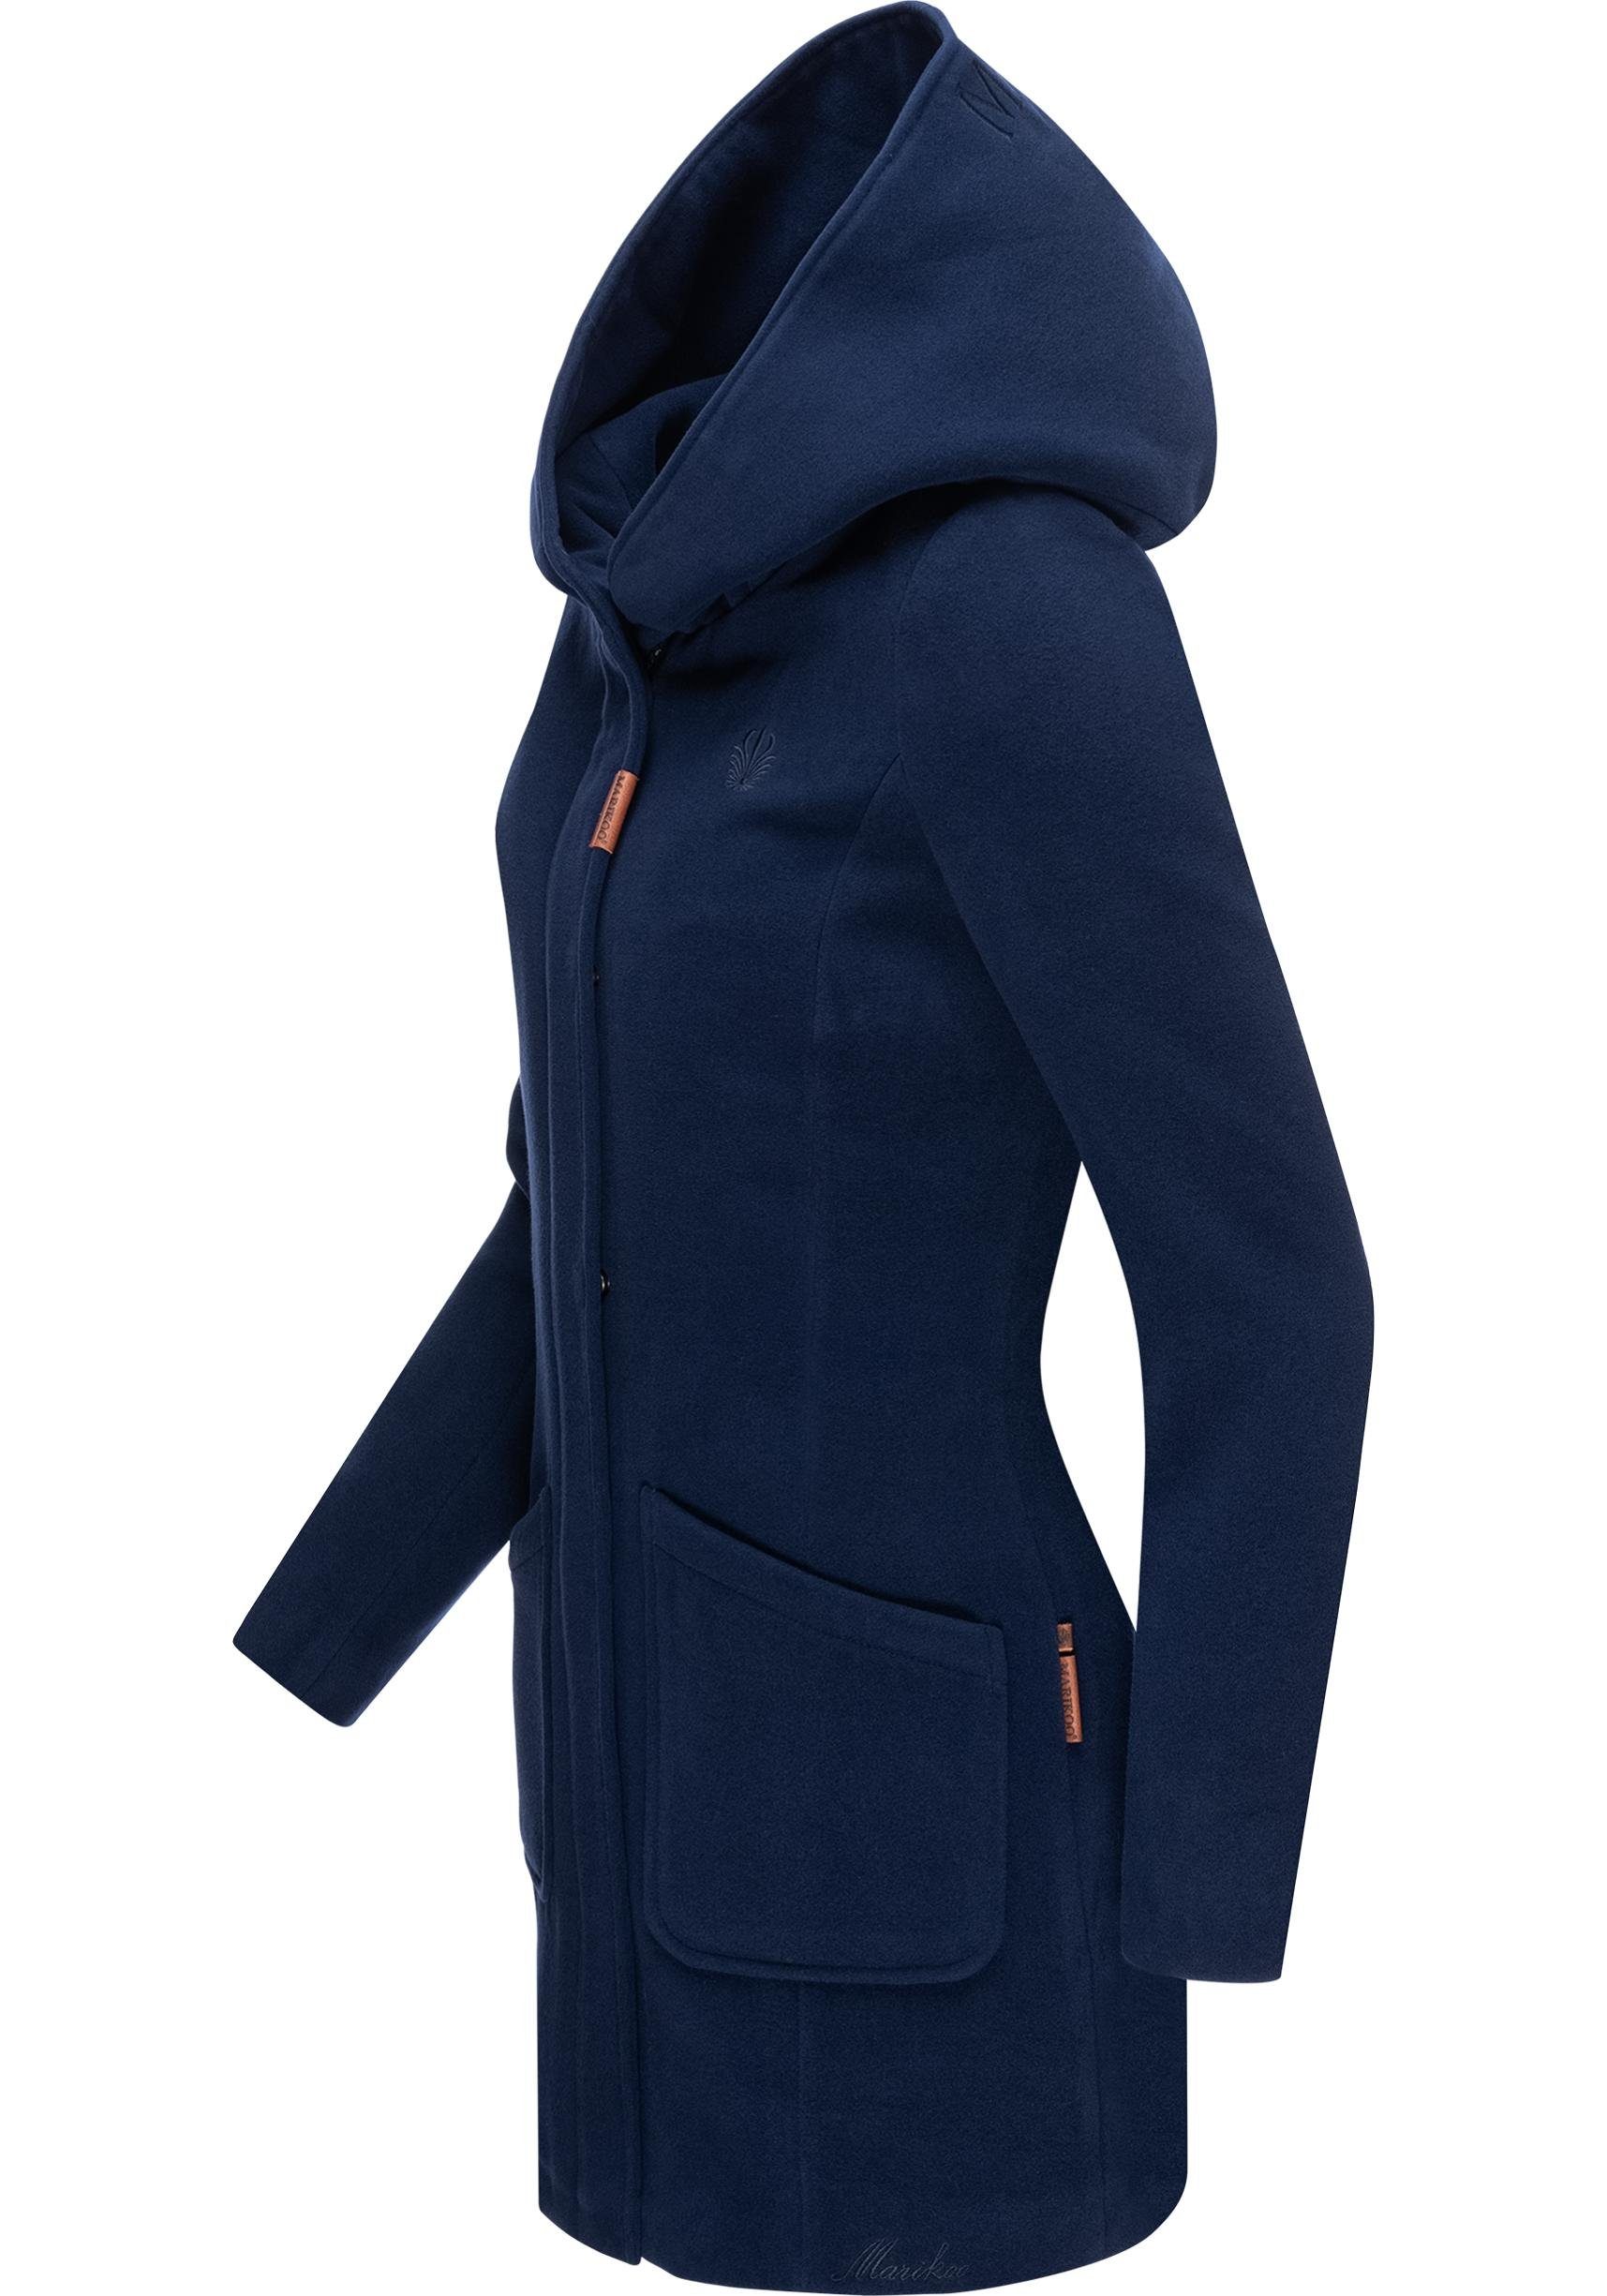 Maikoo navy Marikoo Wintermantel hochwertiger Kapuze mit großer Mantel